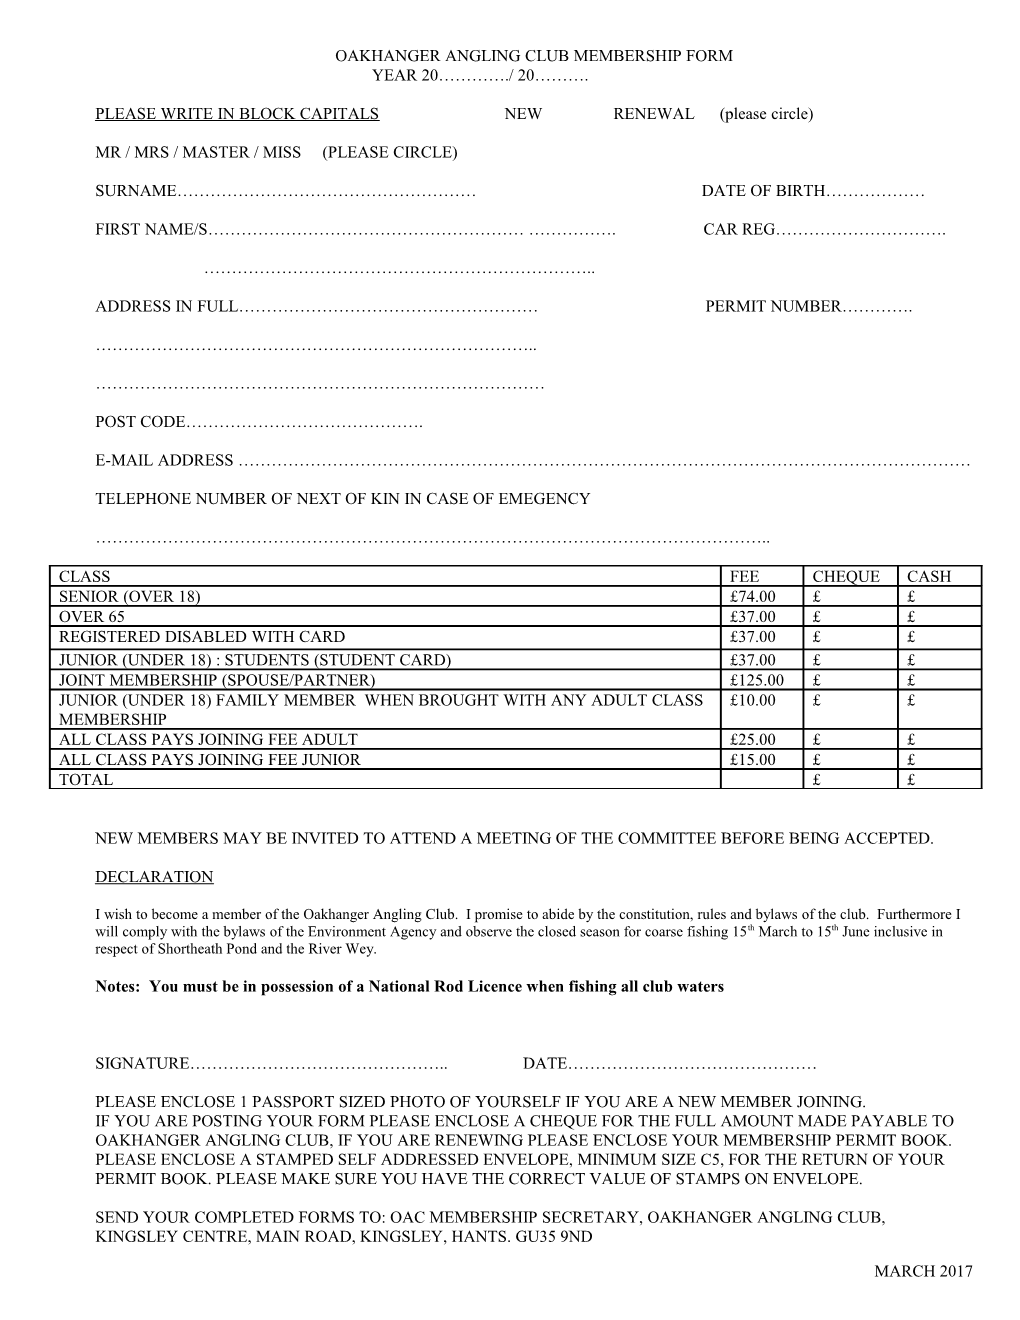 Oakhanger Angling Club New Membership Form